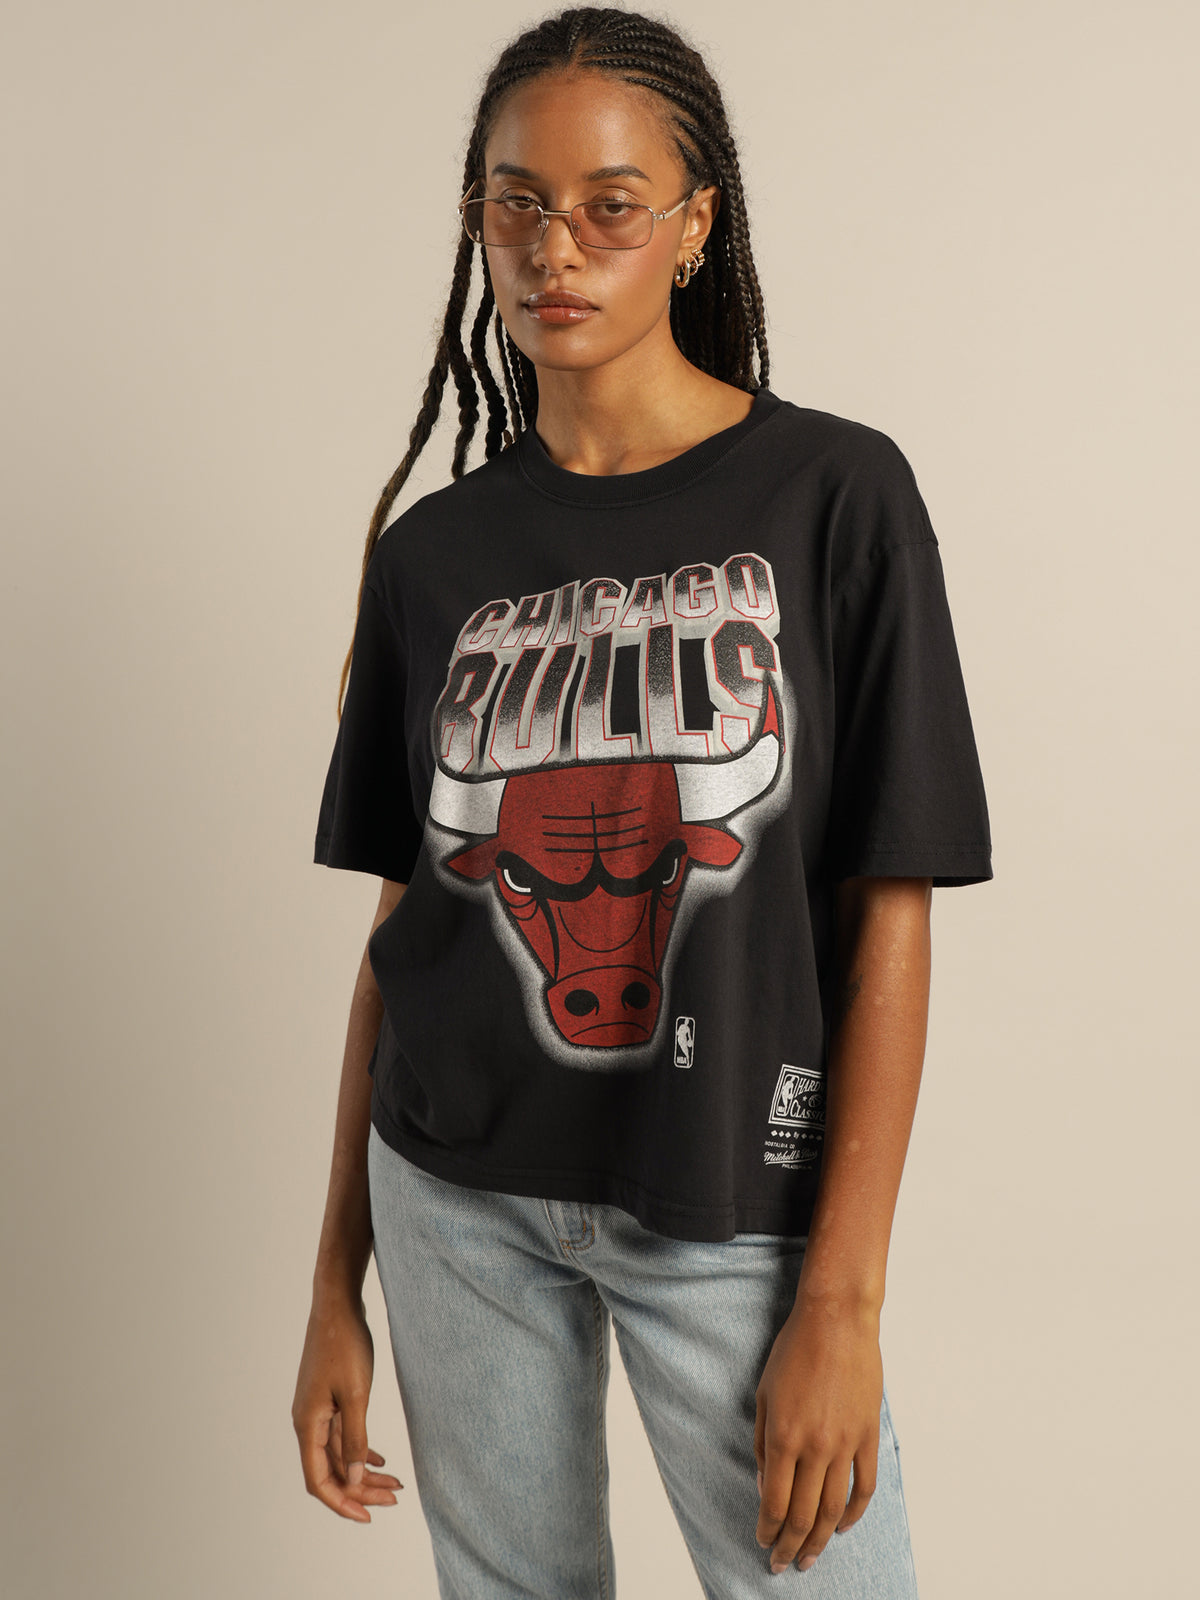 Vintage 90s Chicago Bulls T-Shirt